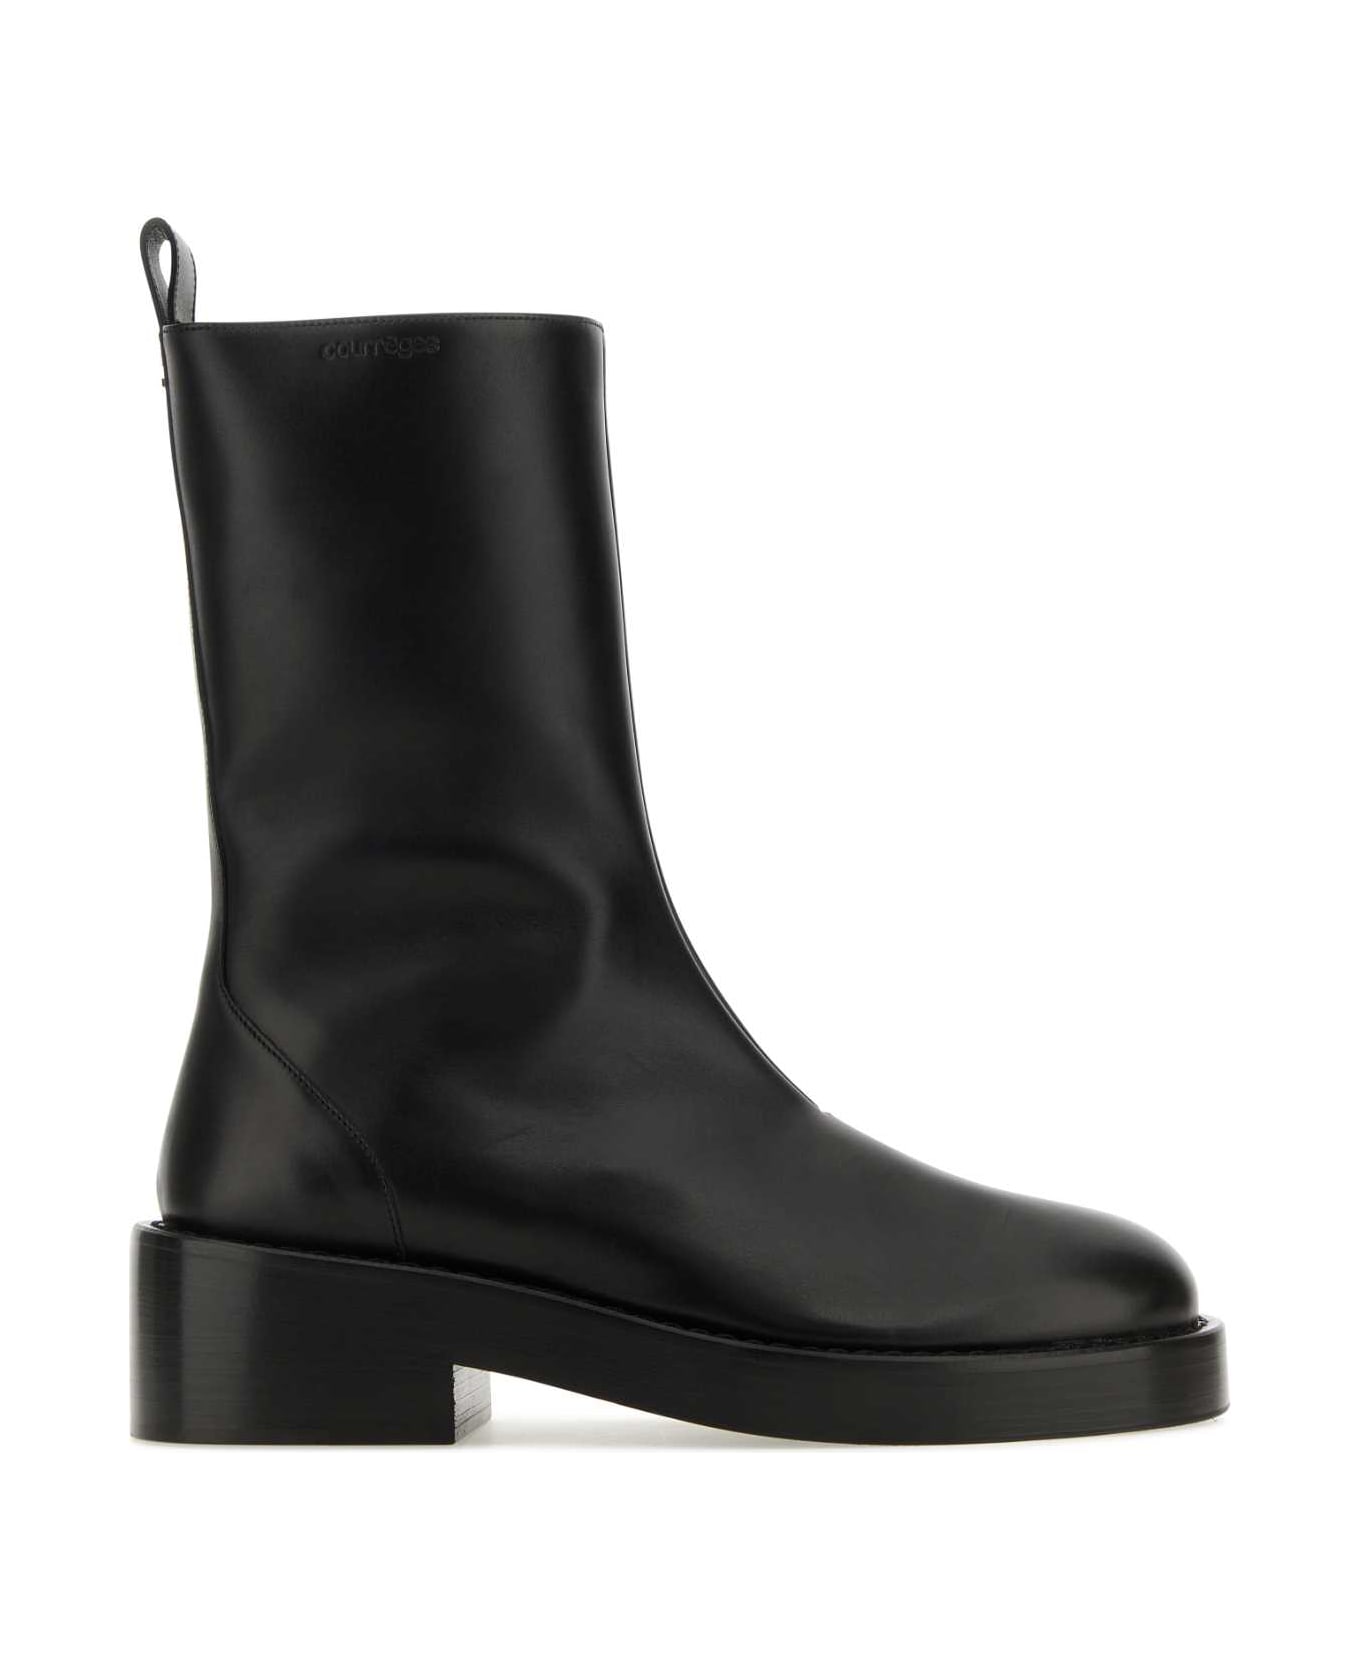 Courrèges Black Leather Ankle Boots - Black ブーツ